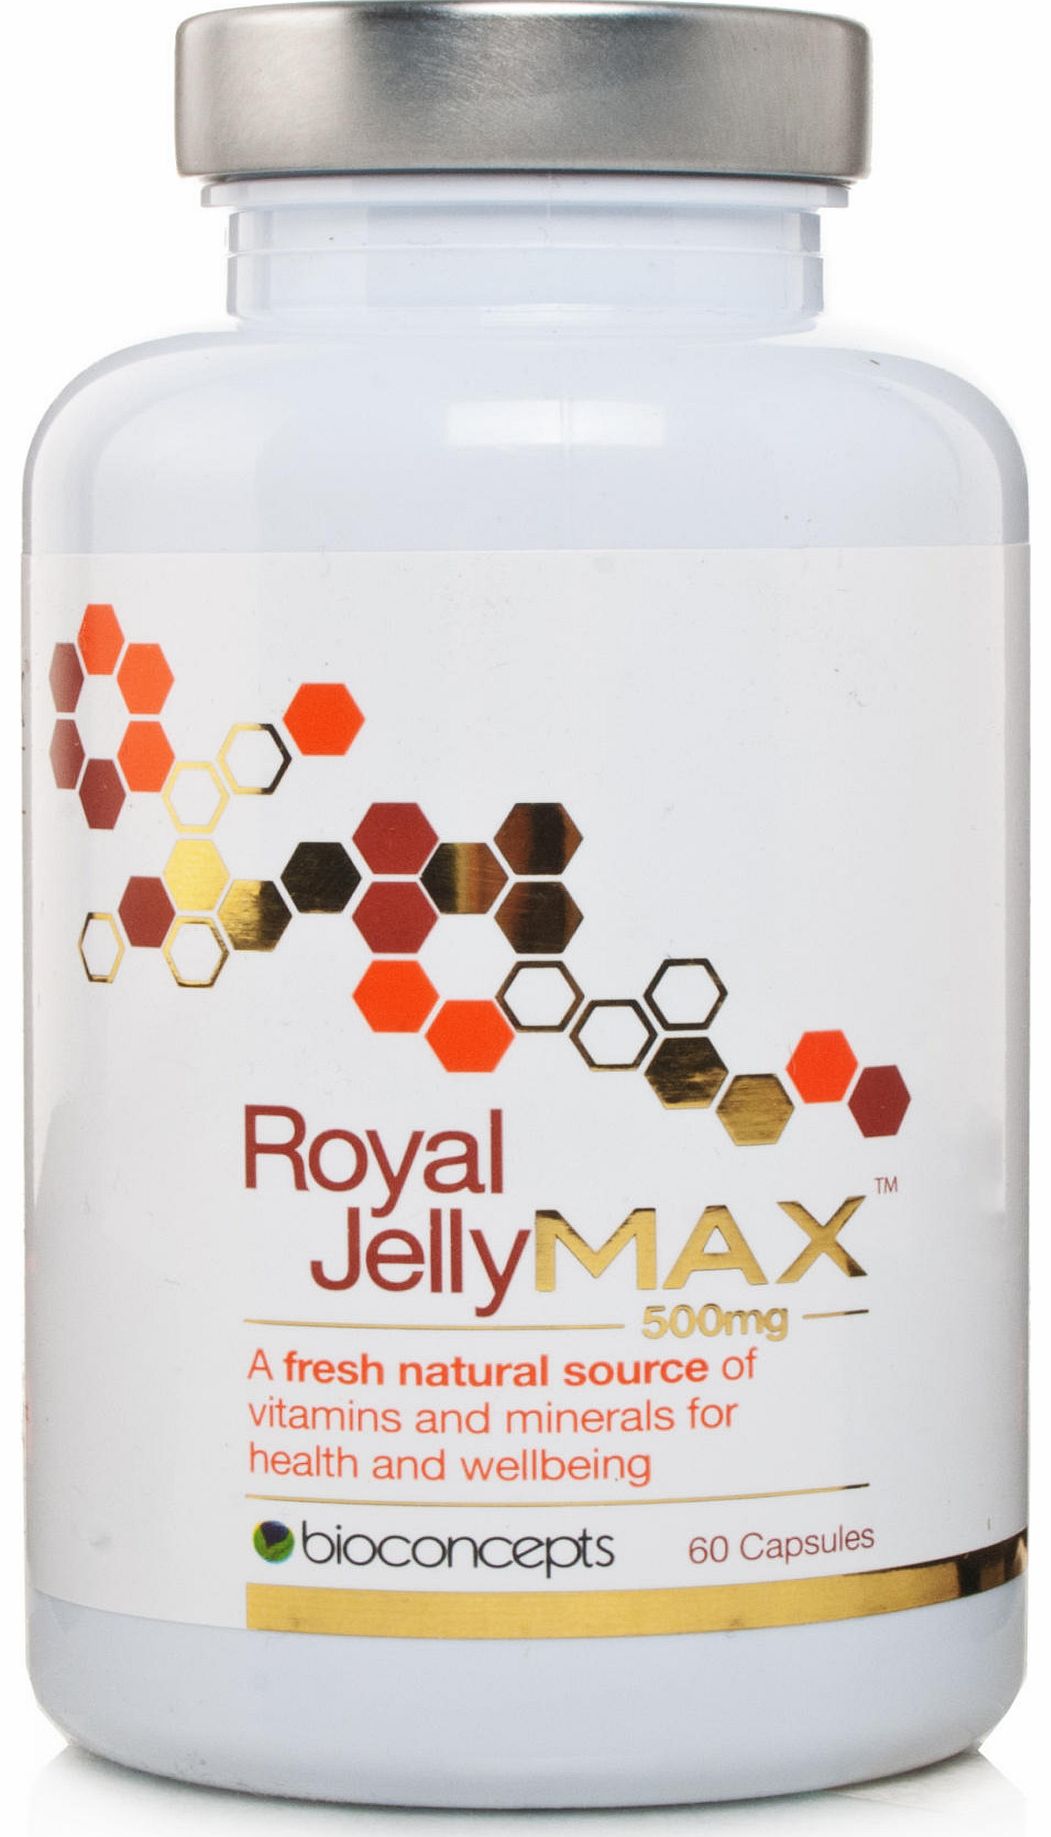 Bioconcepts Royal JellyMAX 500mg